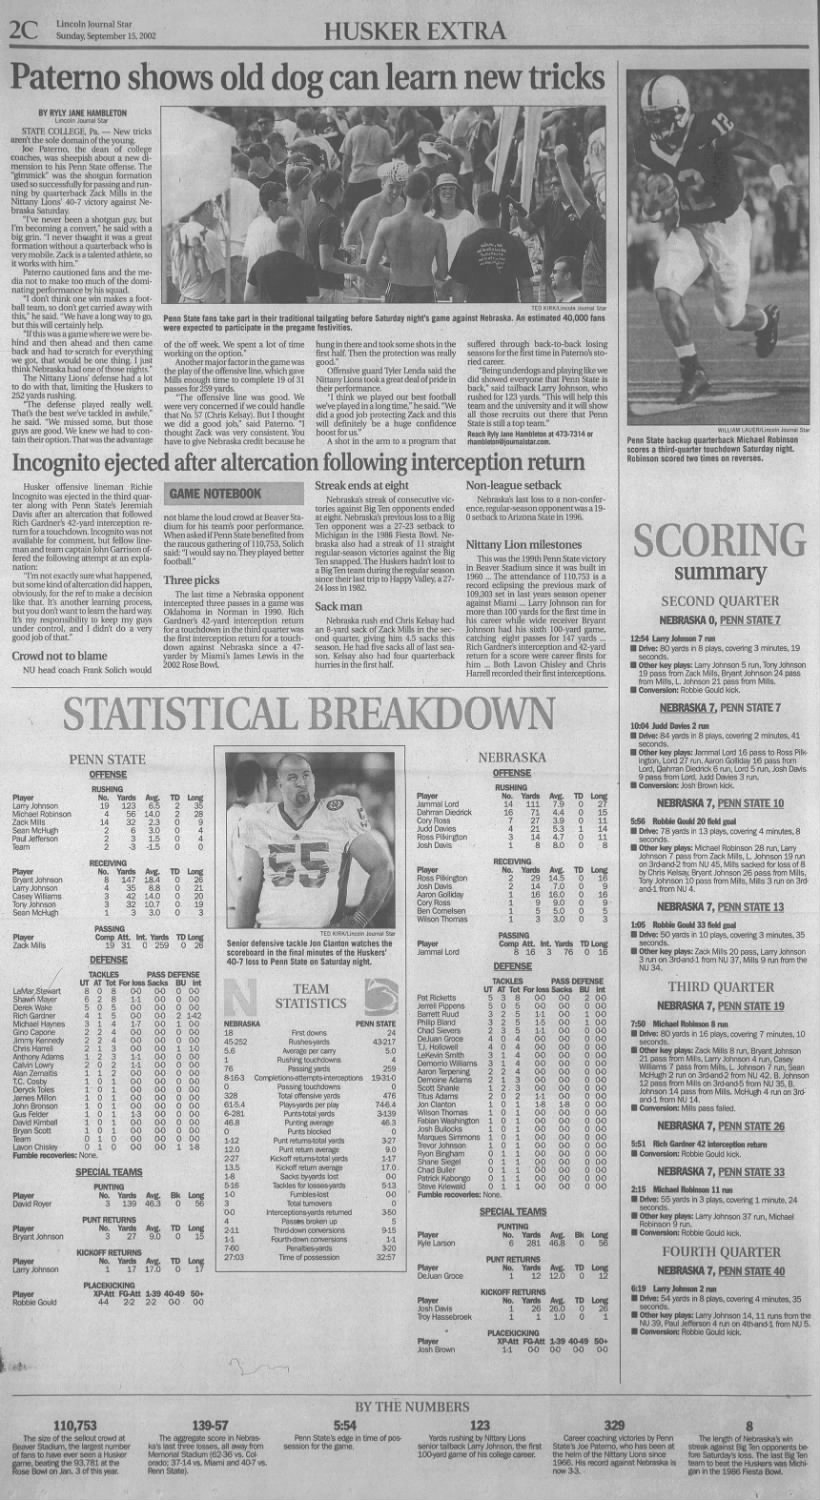 2002 Nebraska-Penn State LJS2